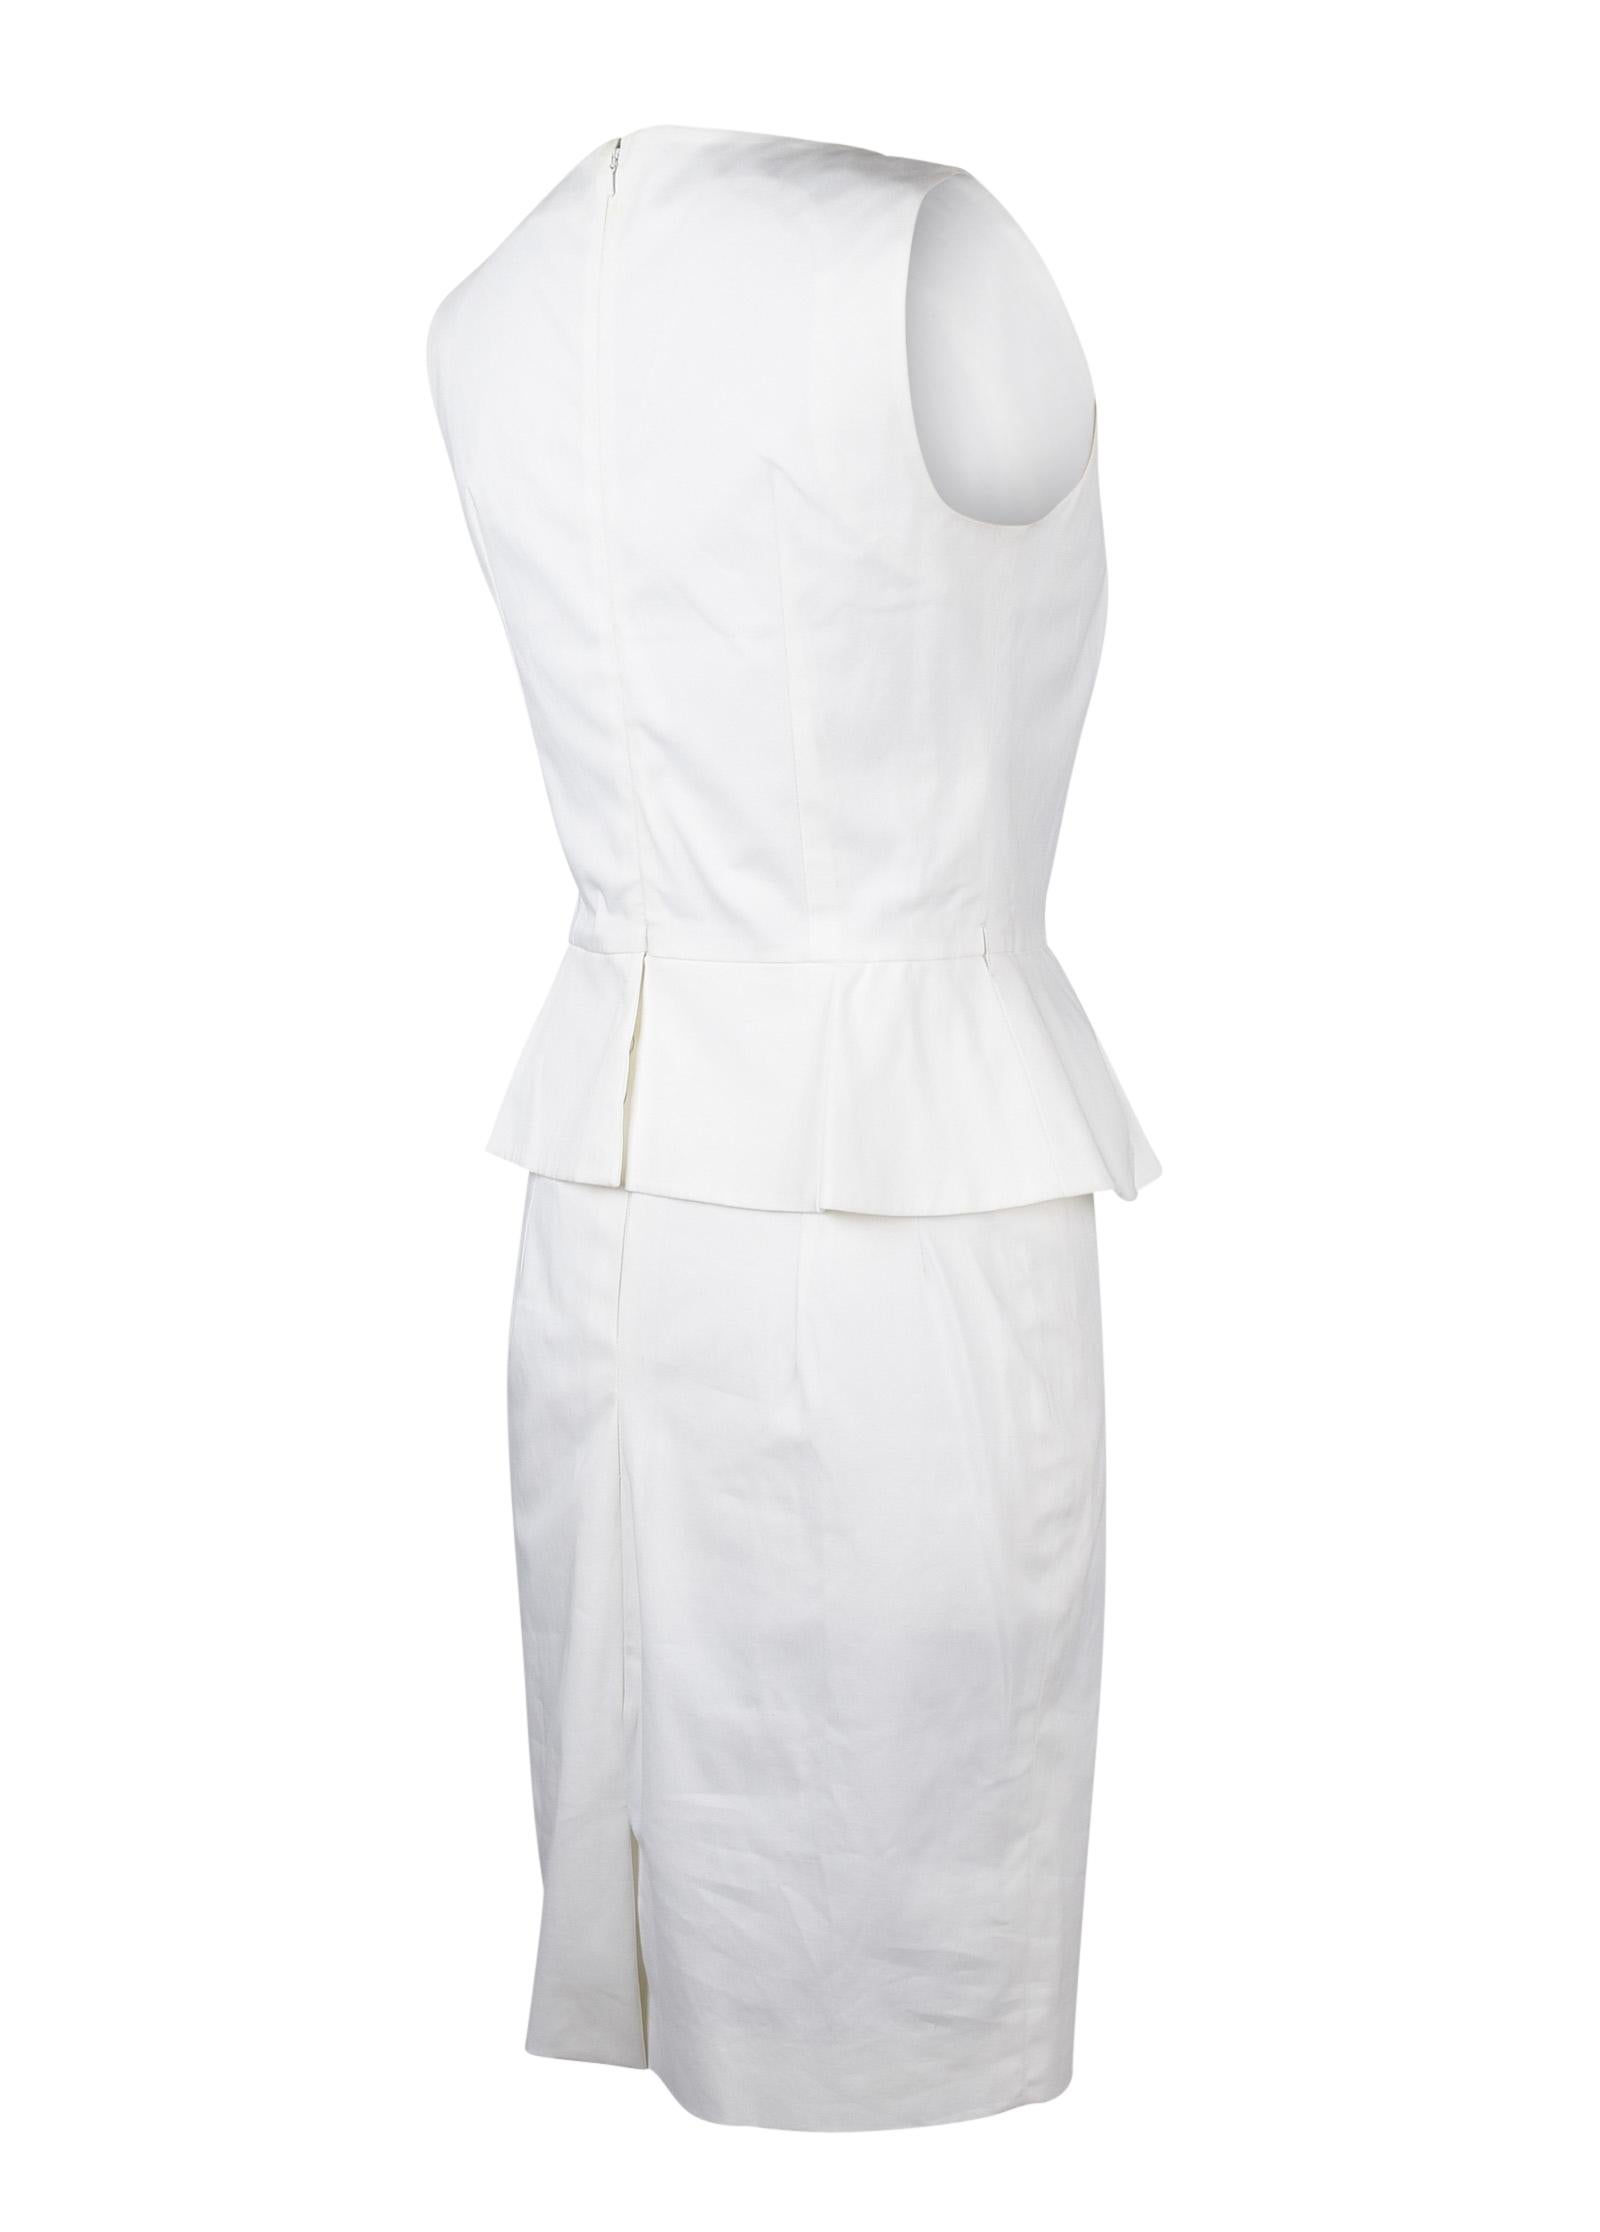 Christian Dior Dress White Cotton Peplum 8 Mint  5